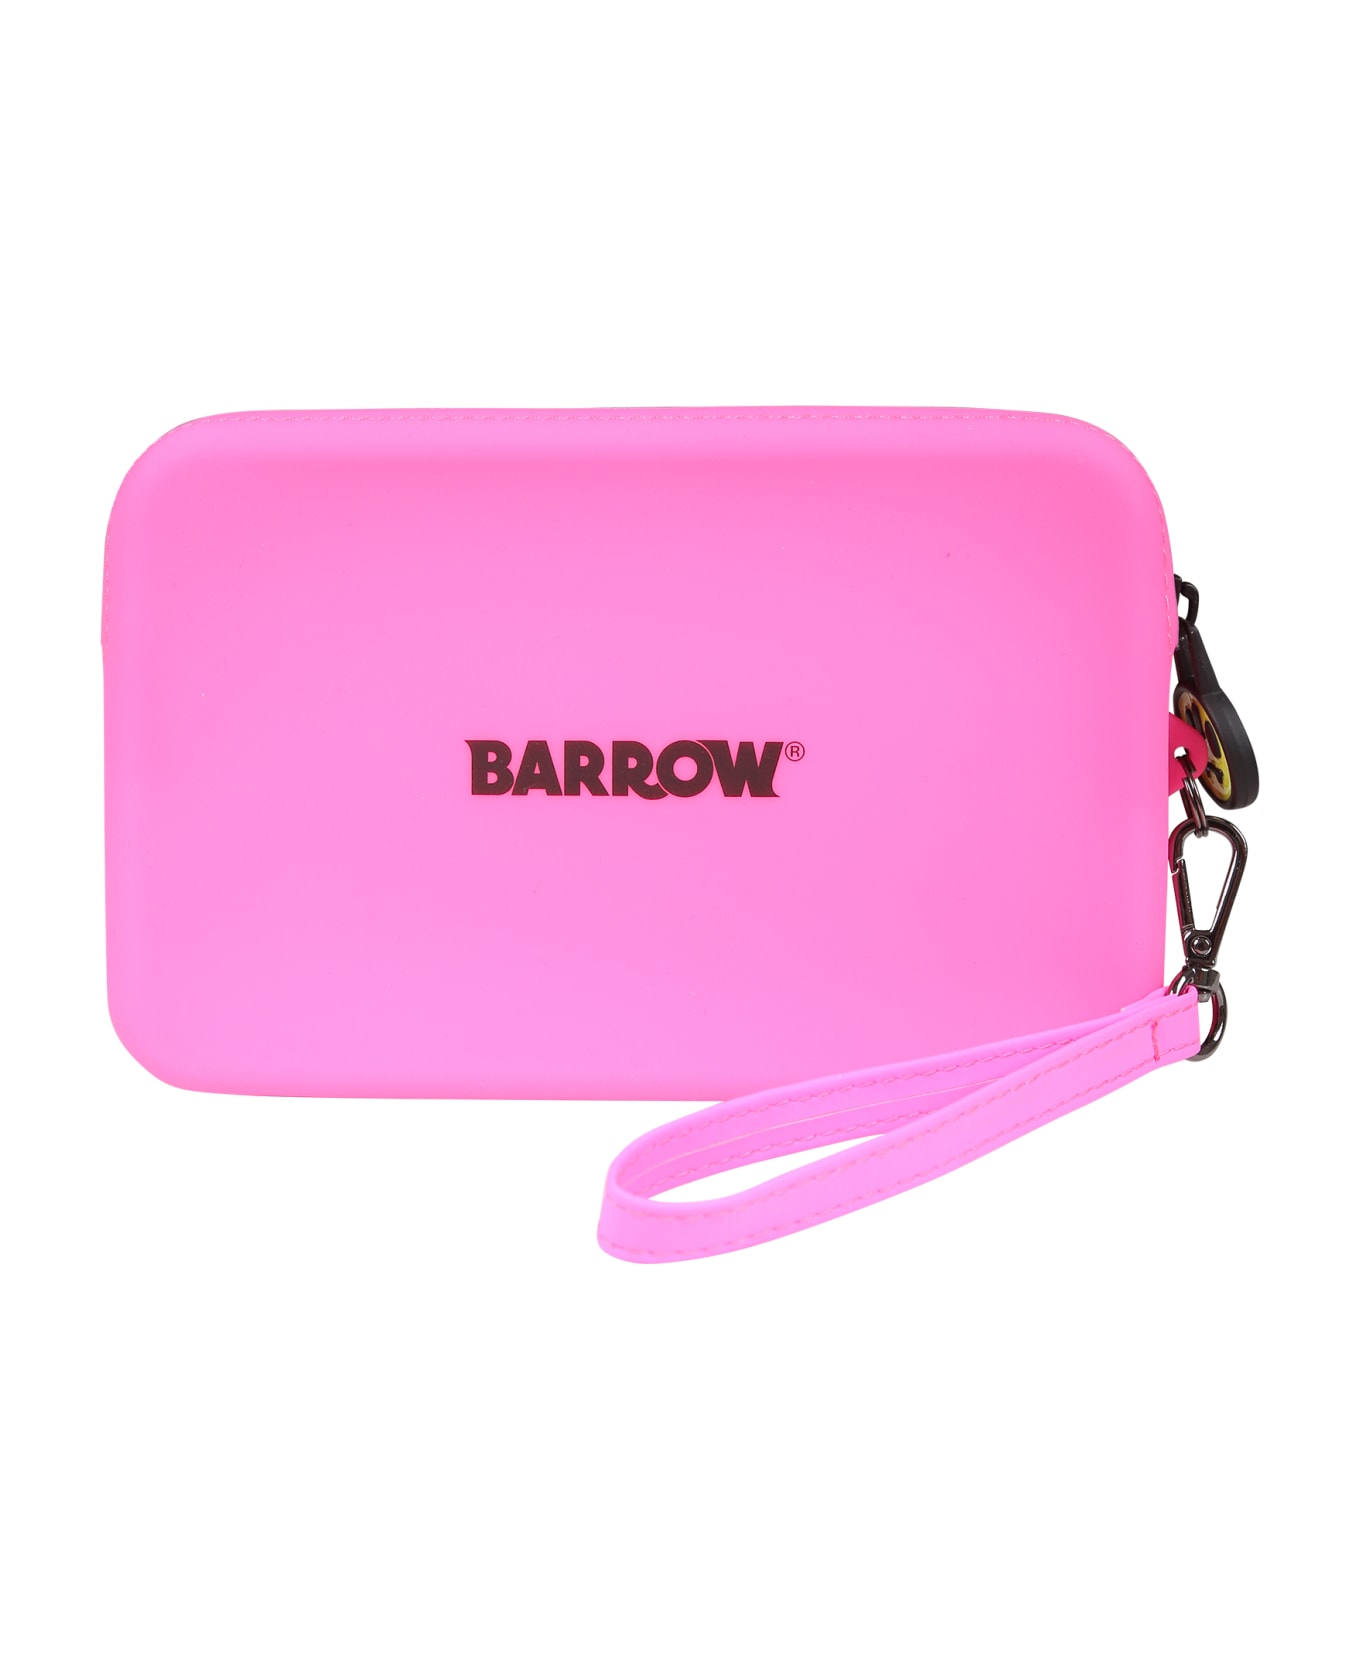 Barrow Fuchsia Clutch Bag For Girl With Smiley - Fuchsia